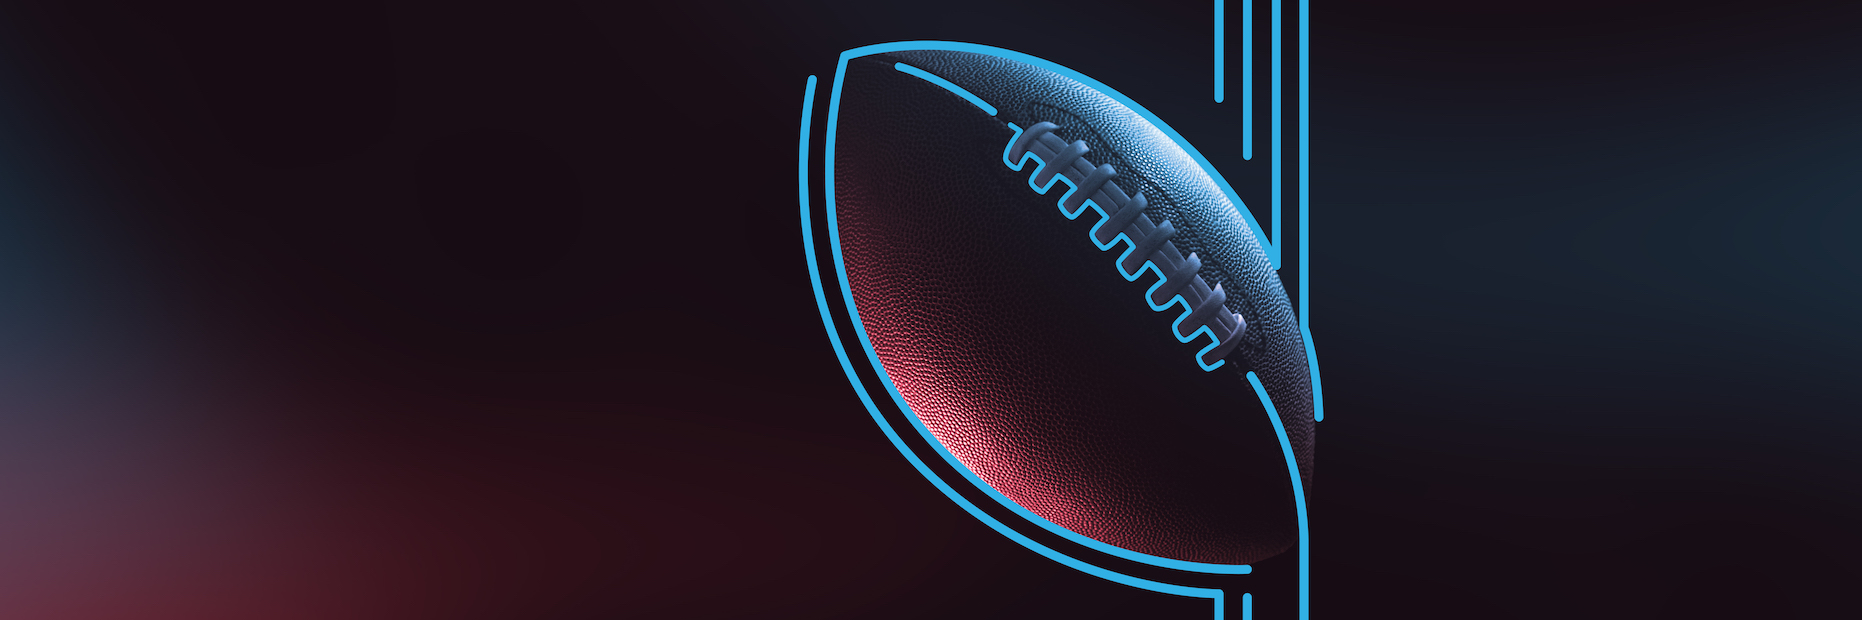 Brand Bowl 2021 Ad Tracker: Anheuser-Busch